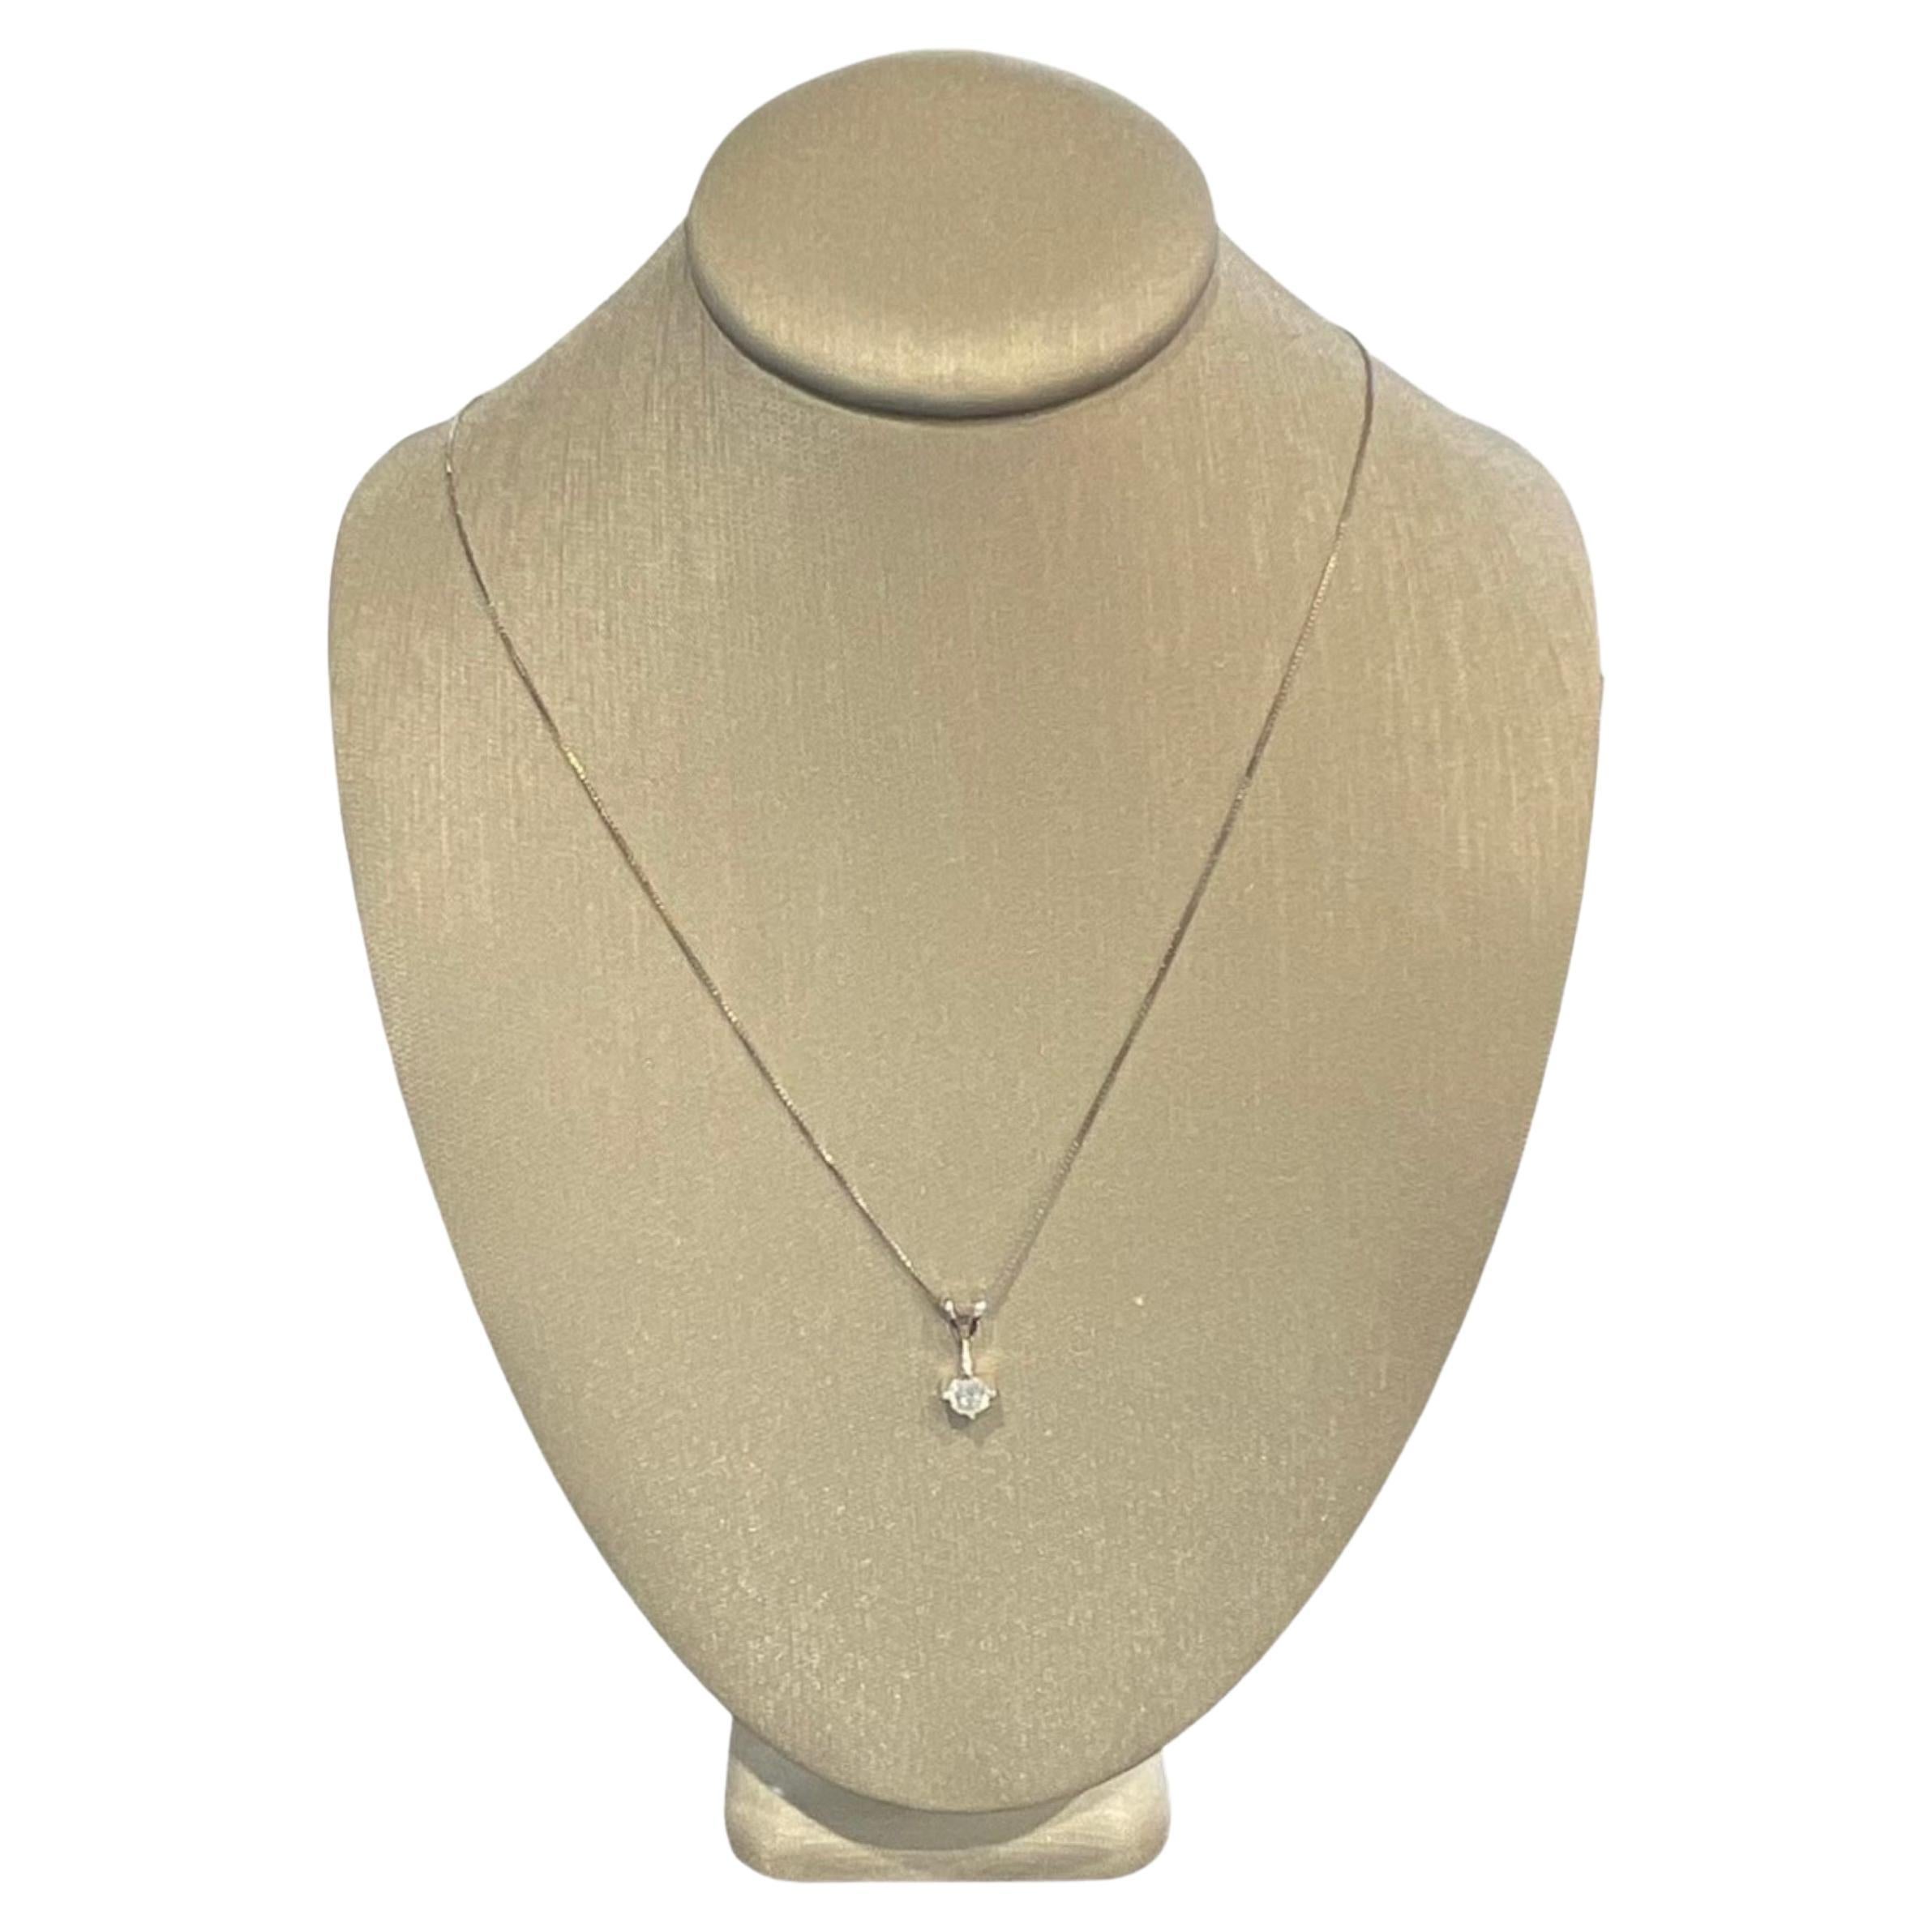 Solitaire Diamond Pendant Necklace in 14k White Gold For Sale